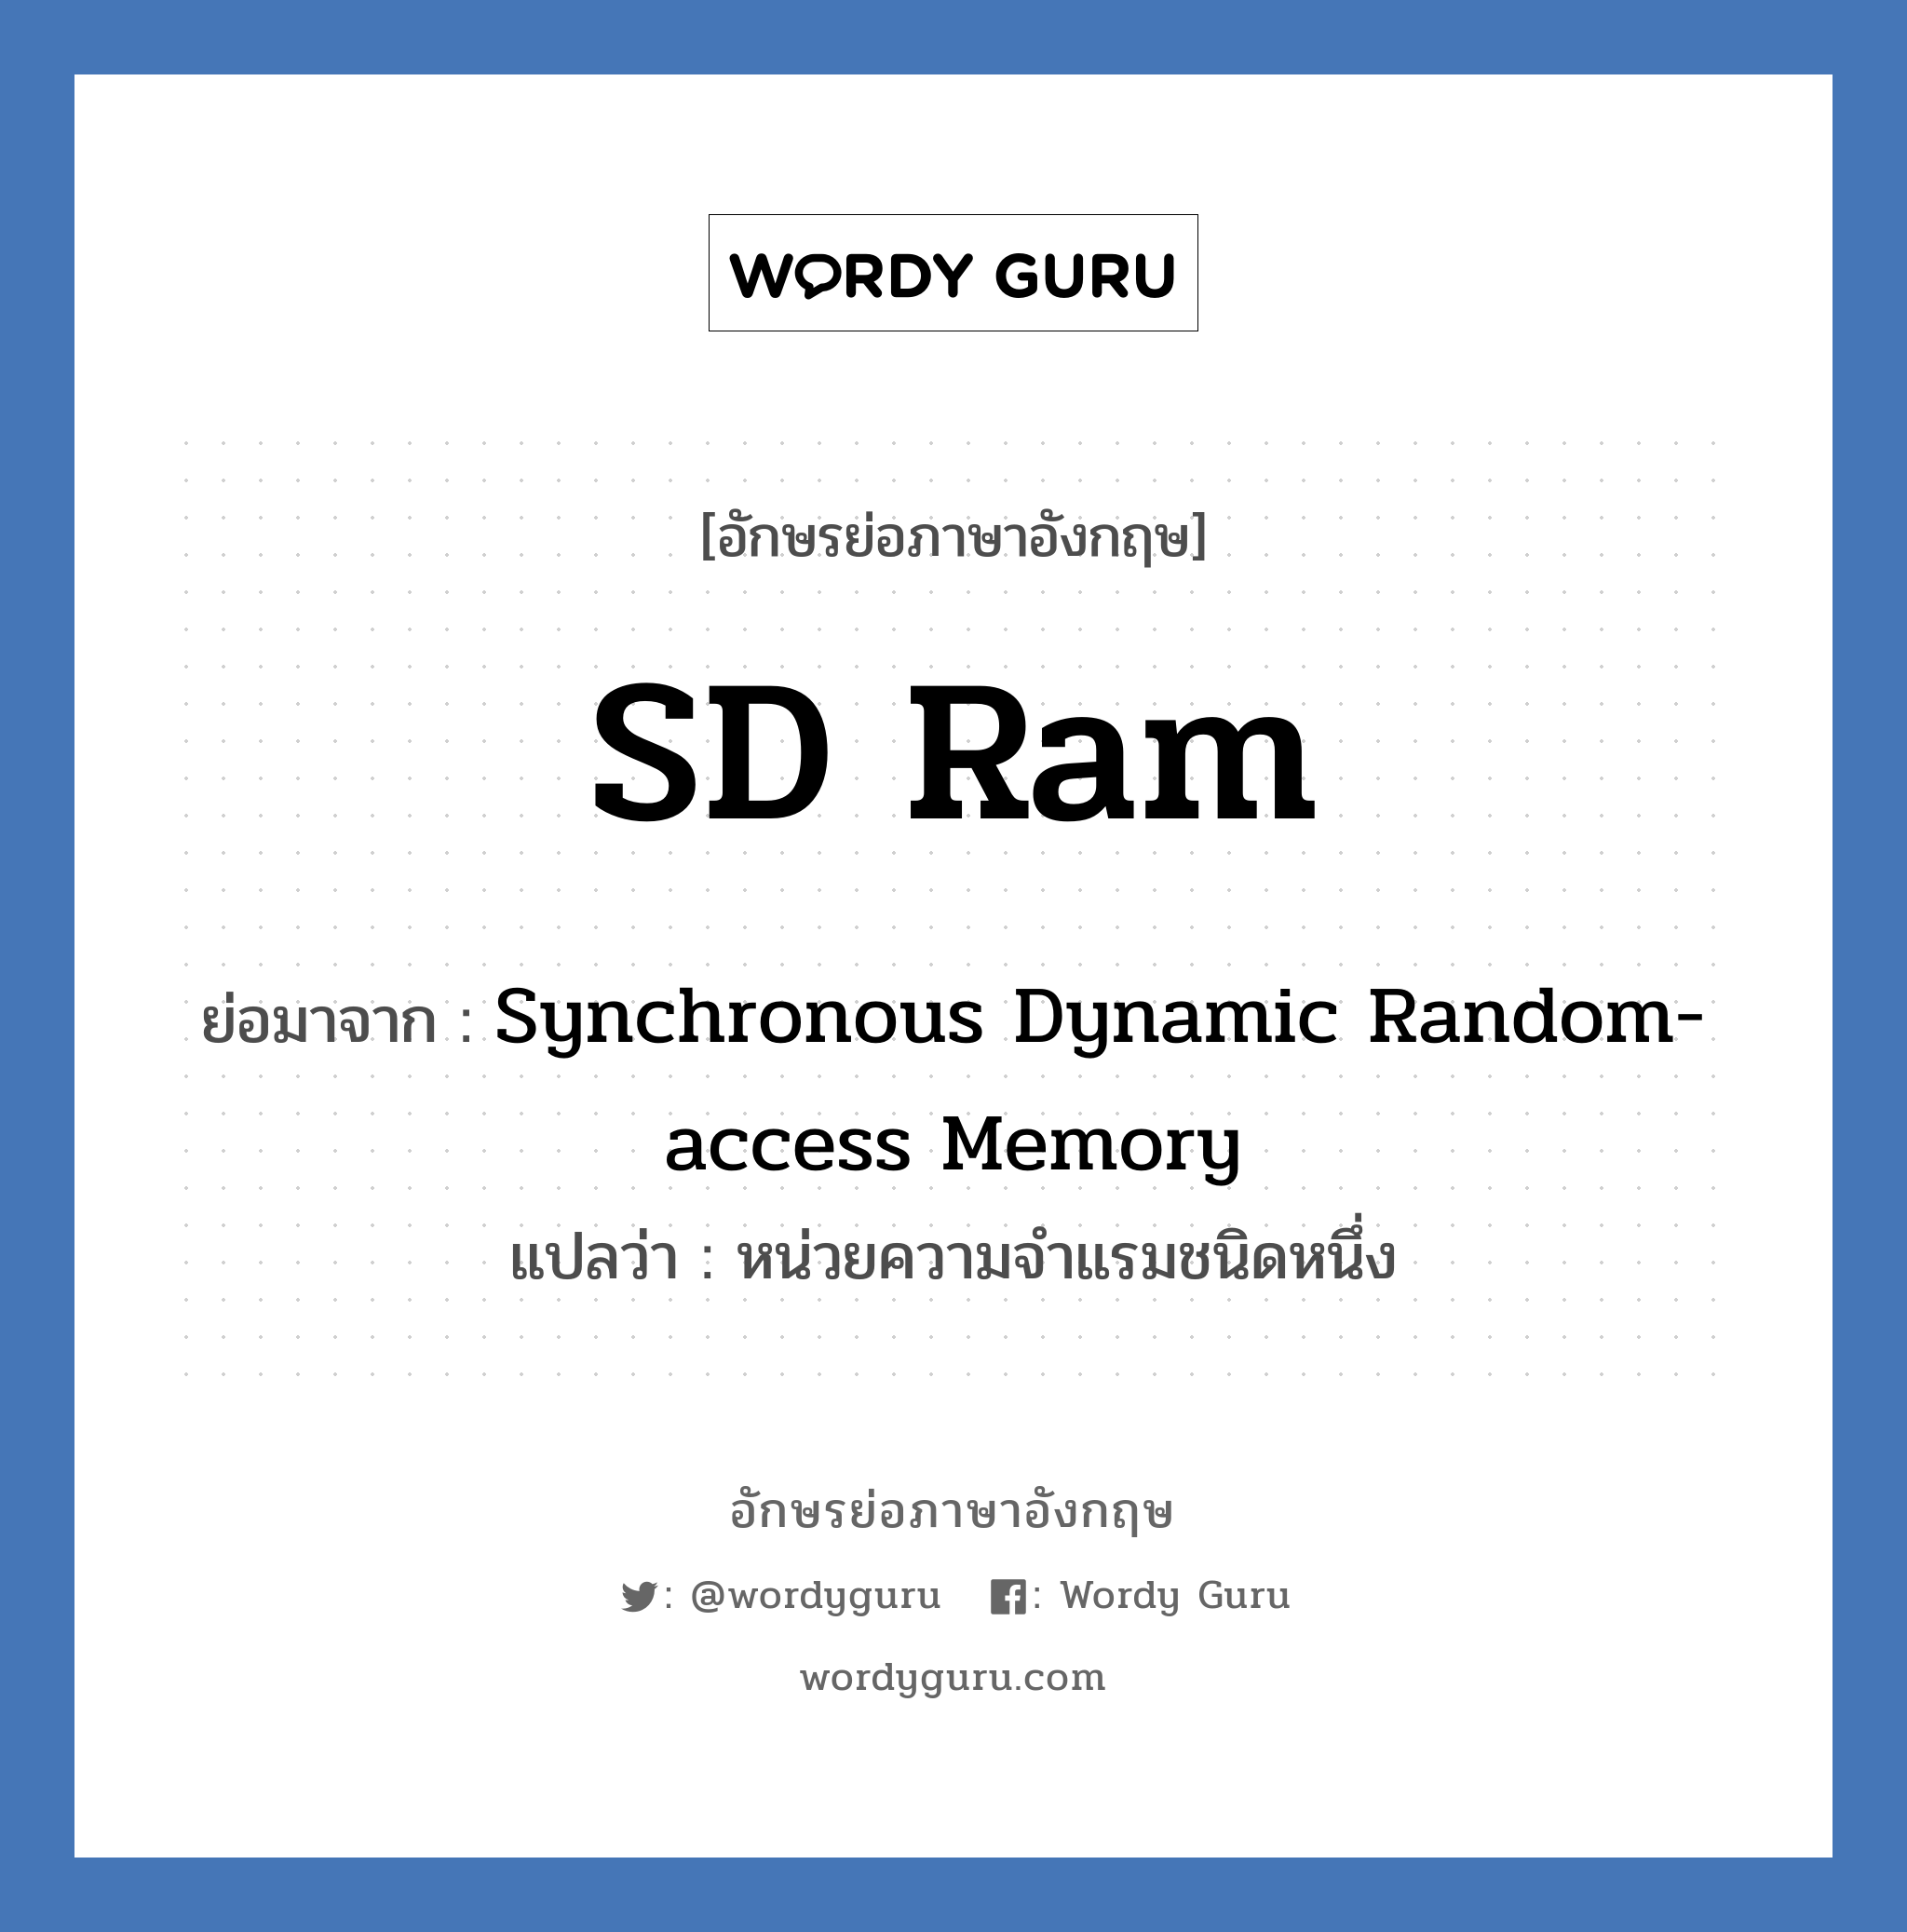 SD Ram ย่อมาจาก? แปลว่า?, อักษรย่อภาษาอังกฤษ SD Ram ย่อมาจาก Synchronous Dynamic Random-access Memory แปลว่า หน่วยความจำแรมชนิดหนึ่ง